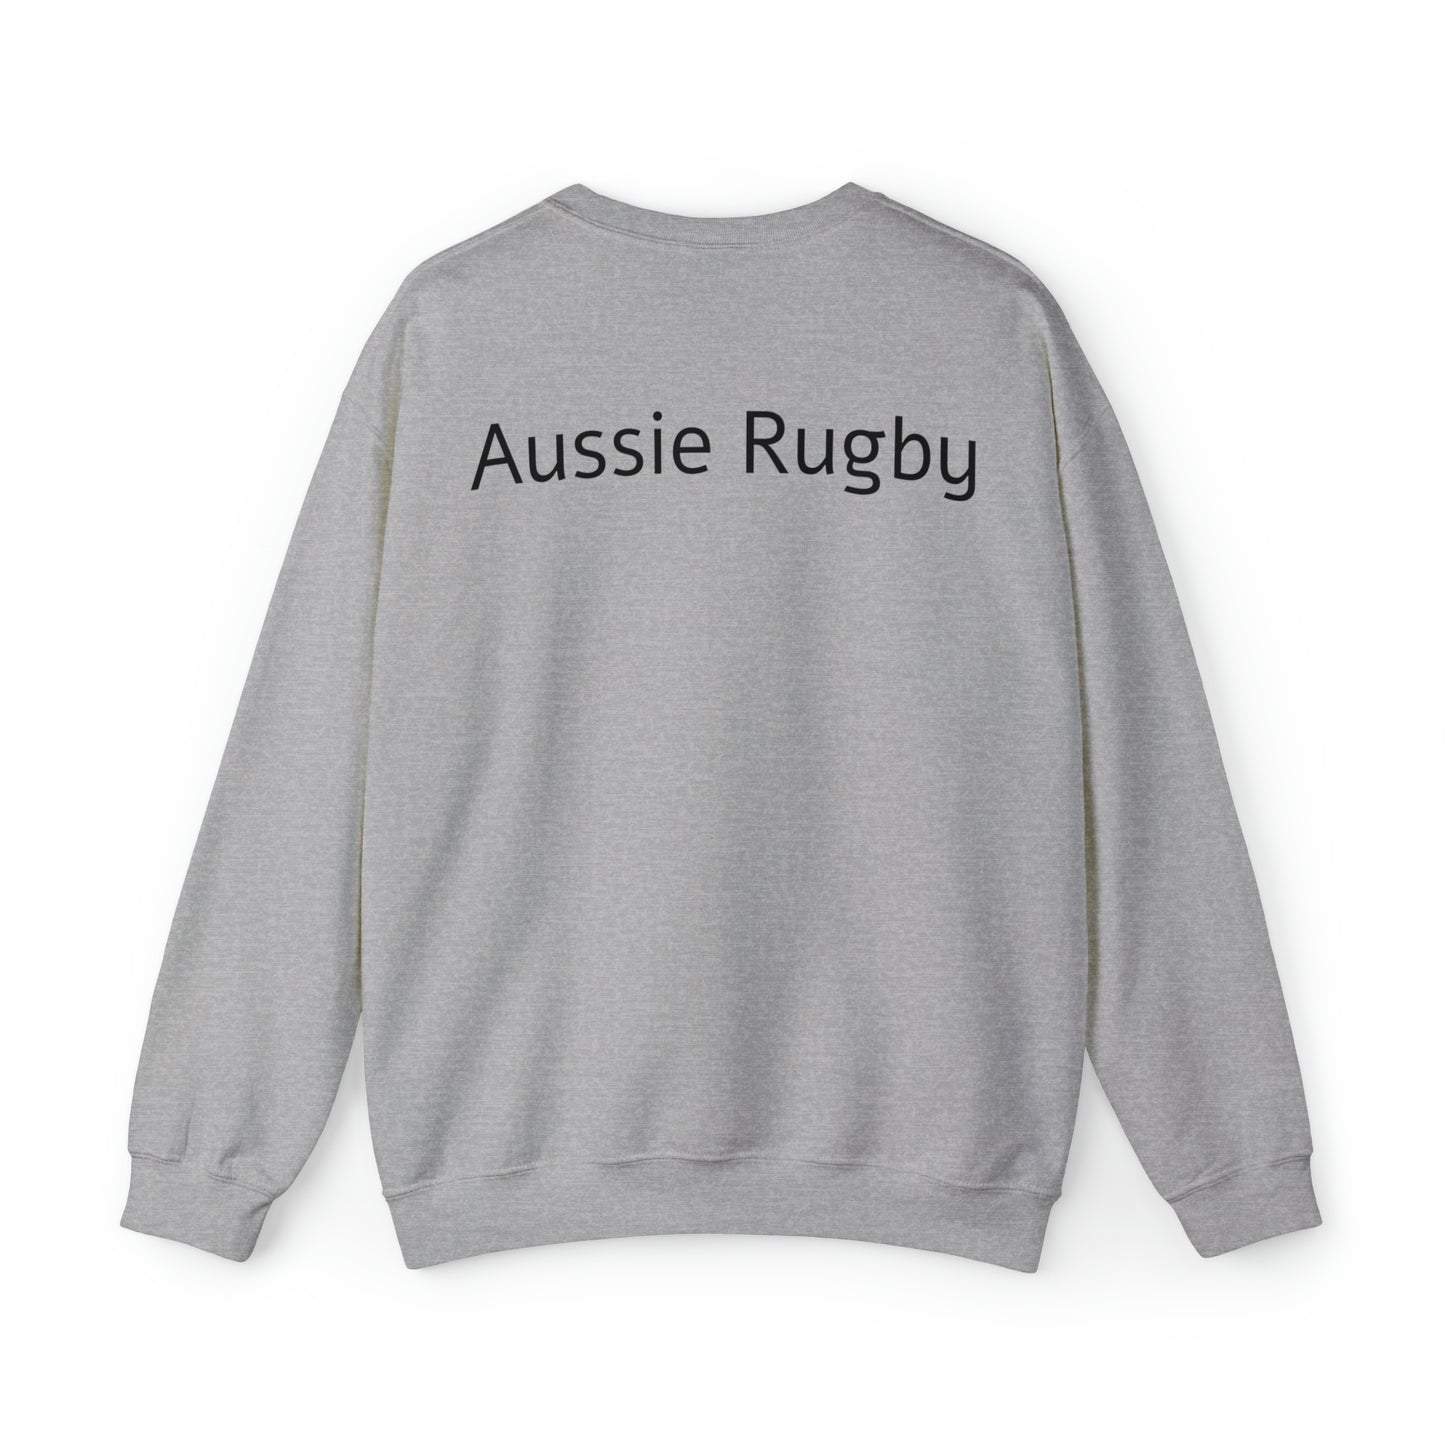 Australia celebrating with RWC - light sweatshirts